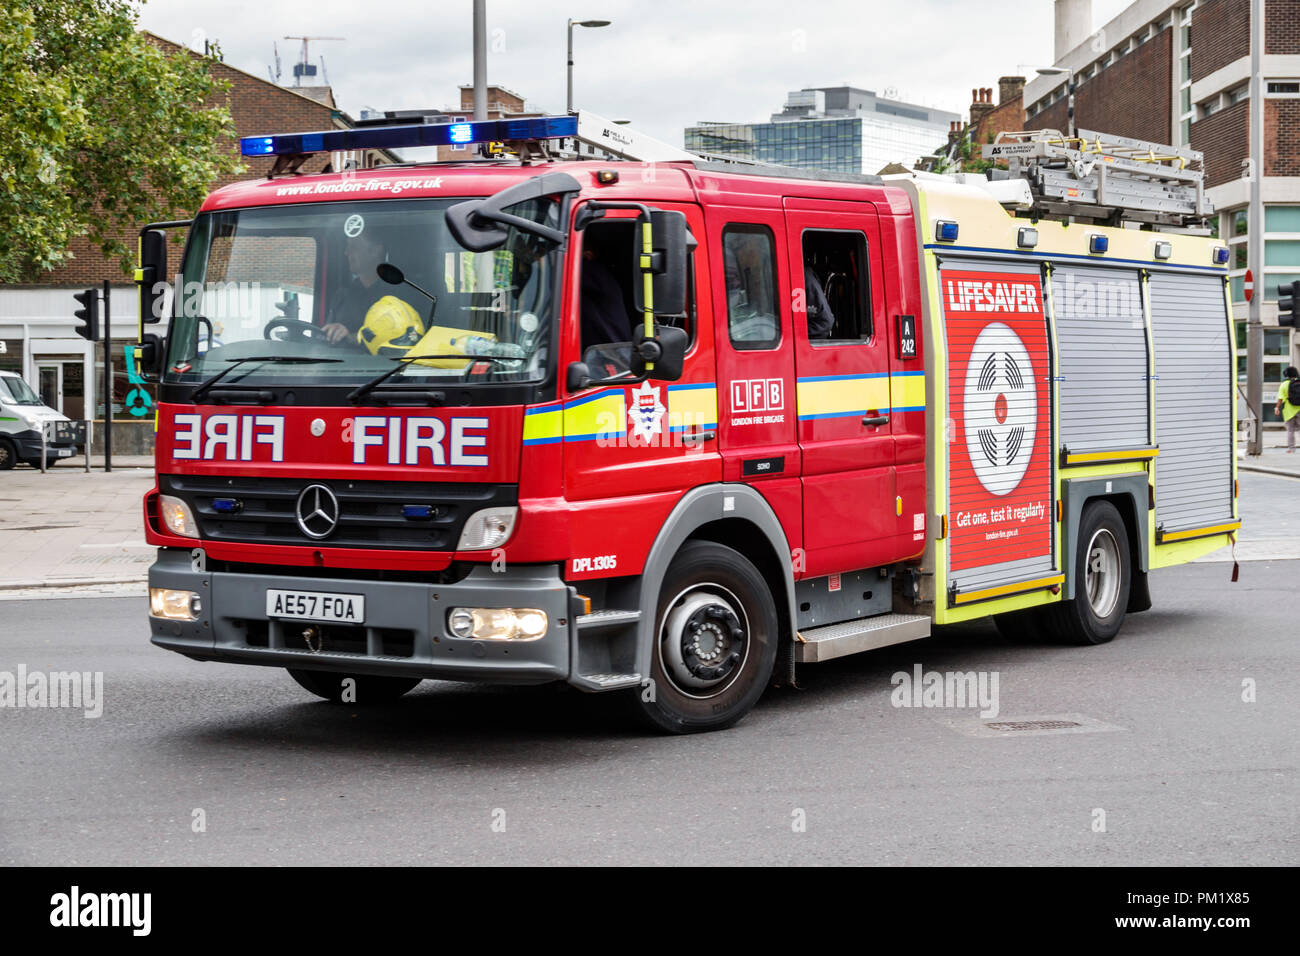 London England,UK,South Bank,LFB fire brigade engine truck emergency vehicle,inverted backward lettering,red,UK GB English Europe,UK180814050 Stock Photo